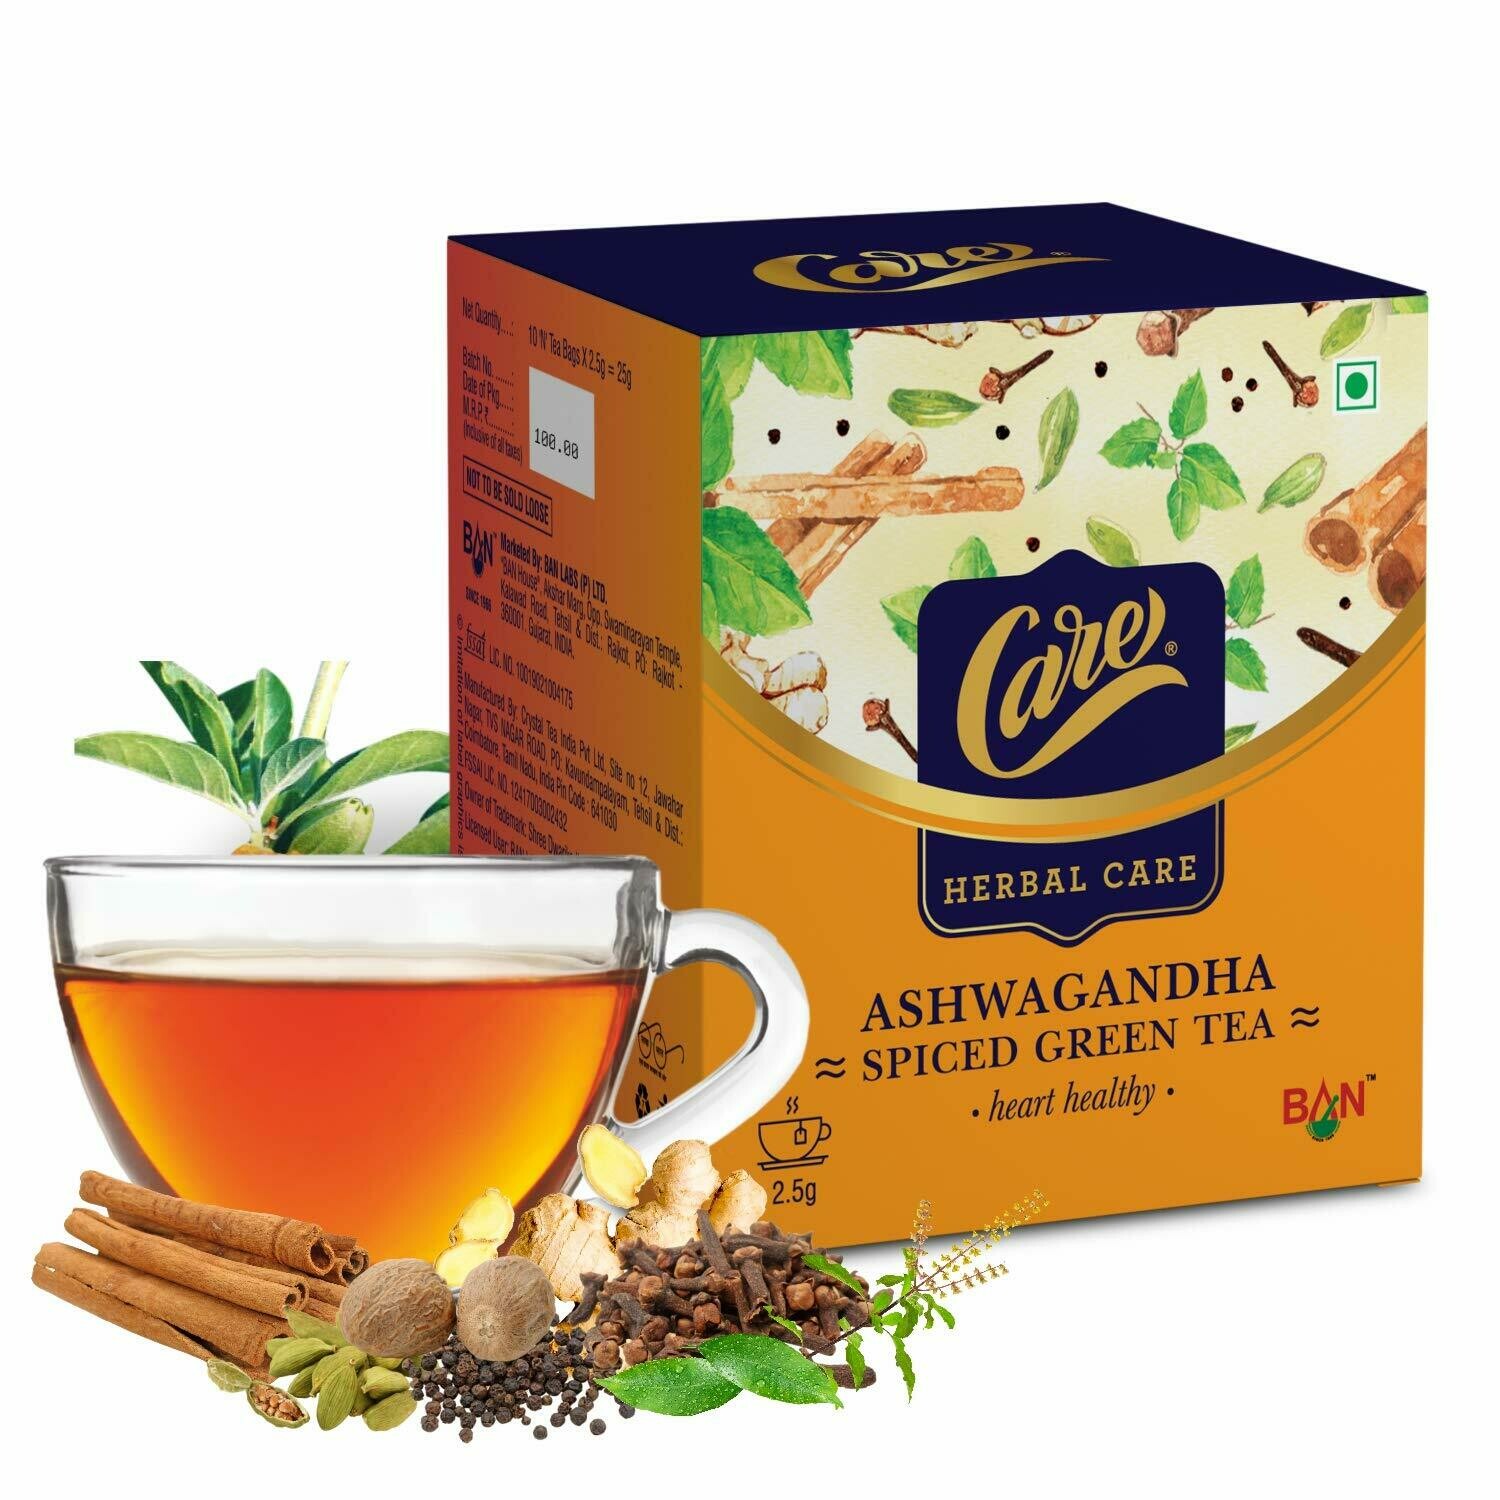 Care Ashwagandha Spiced Green Tea